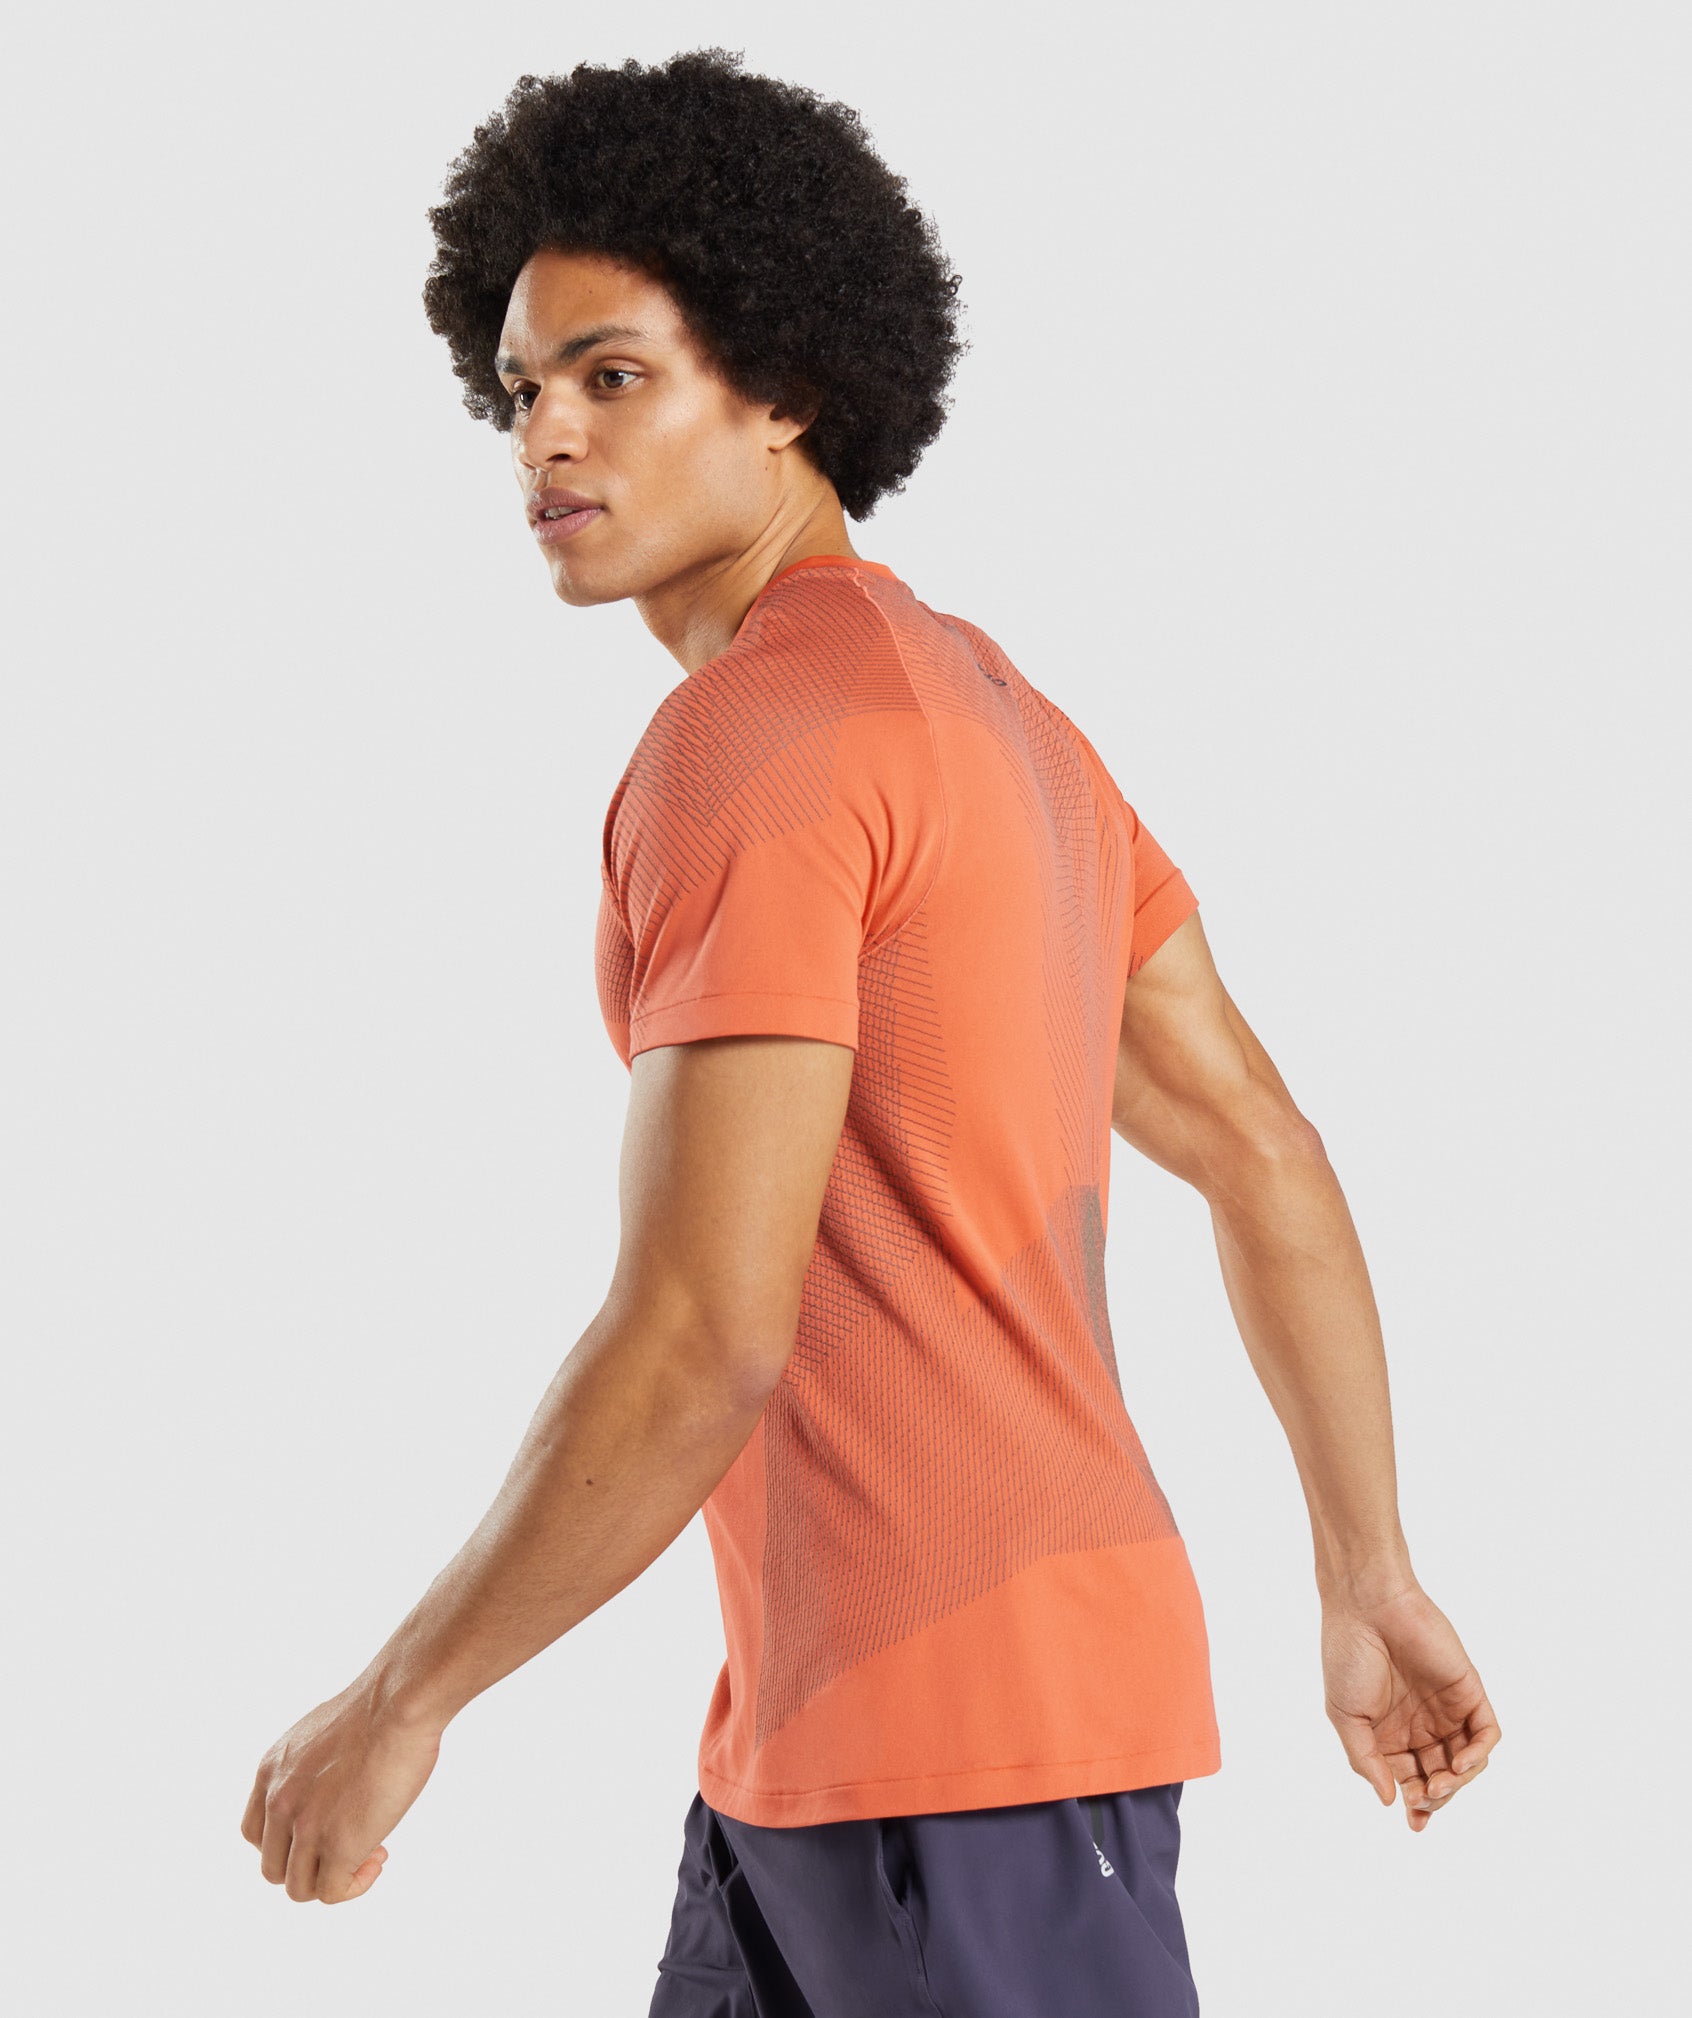 Apex Seamless T-Shirt in Papaya Orange/Onyx Grey - view 3